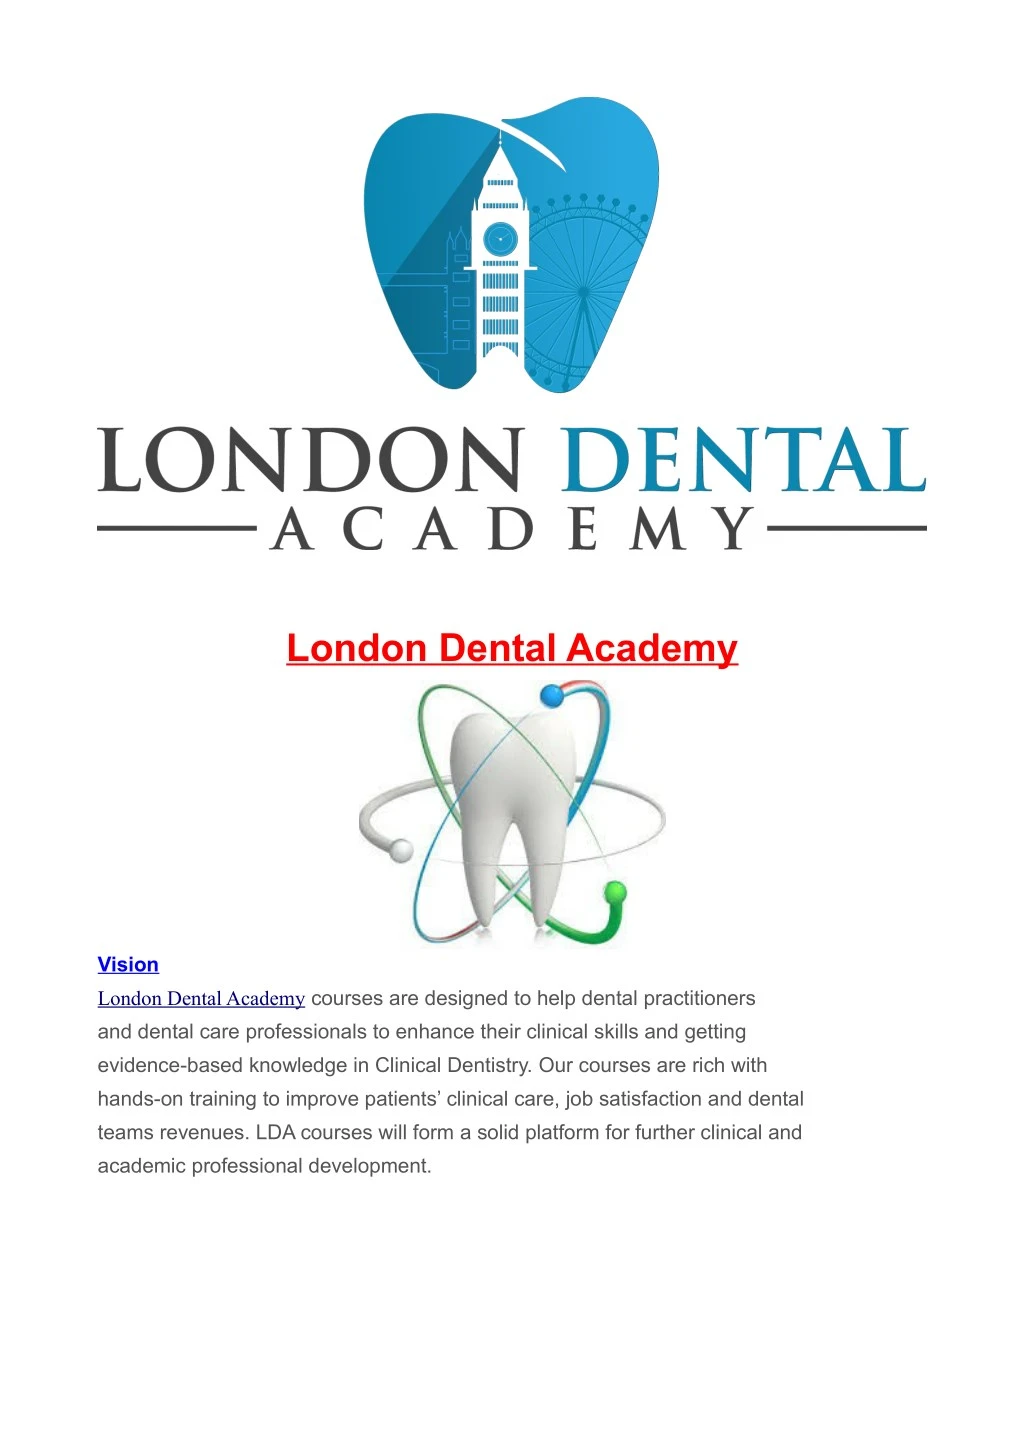 london dental academy